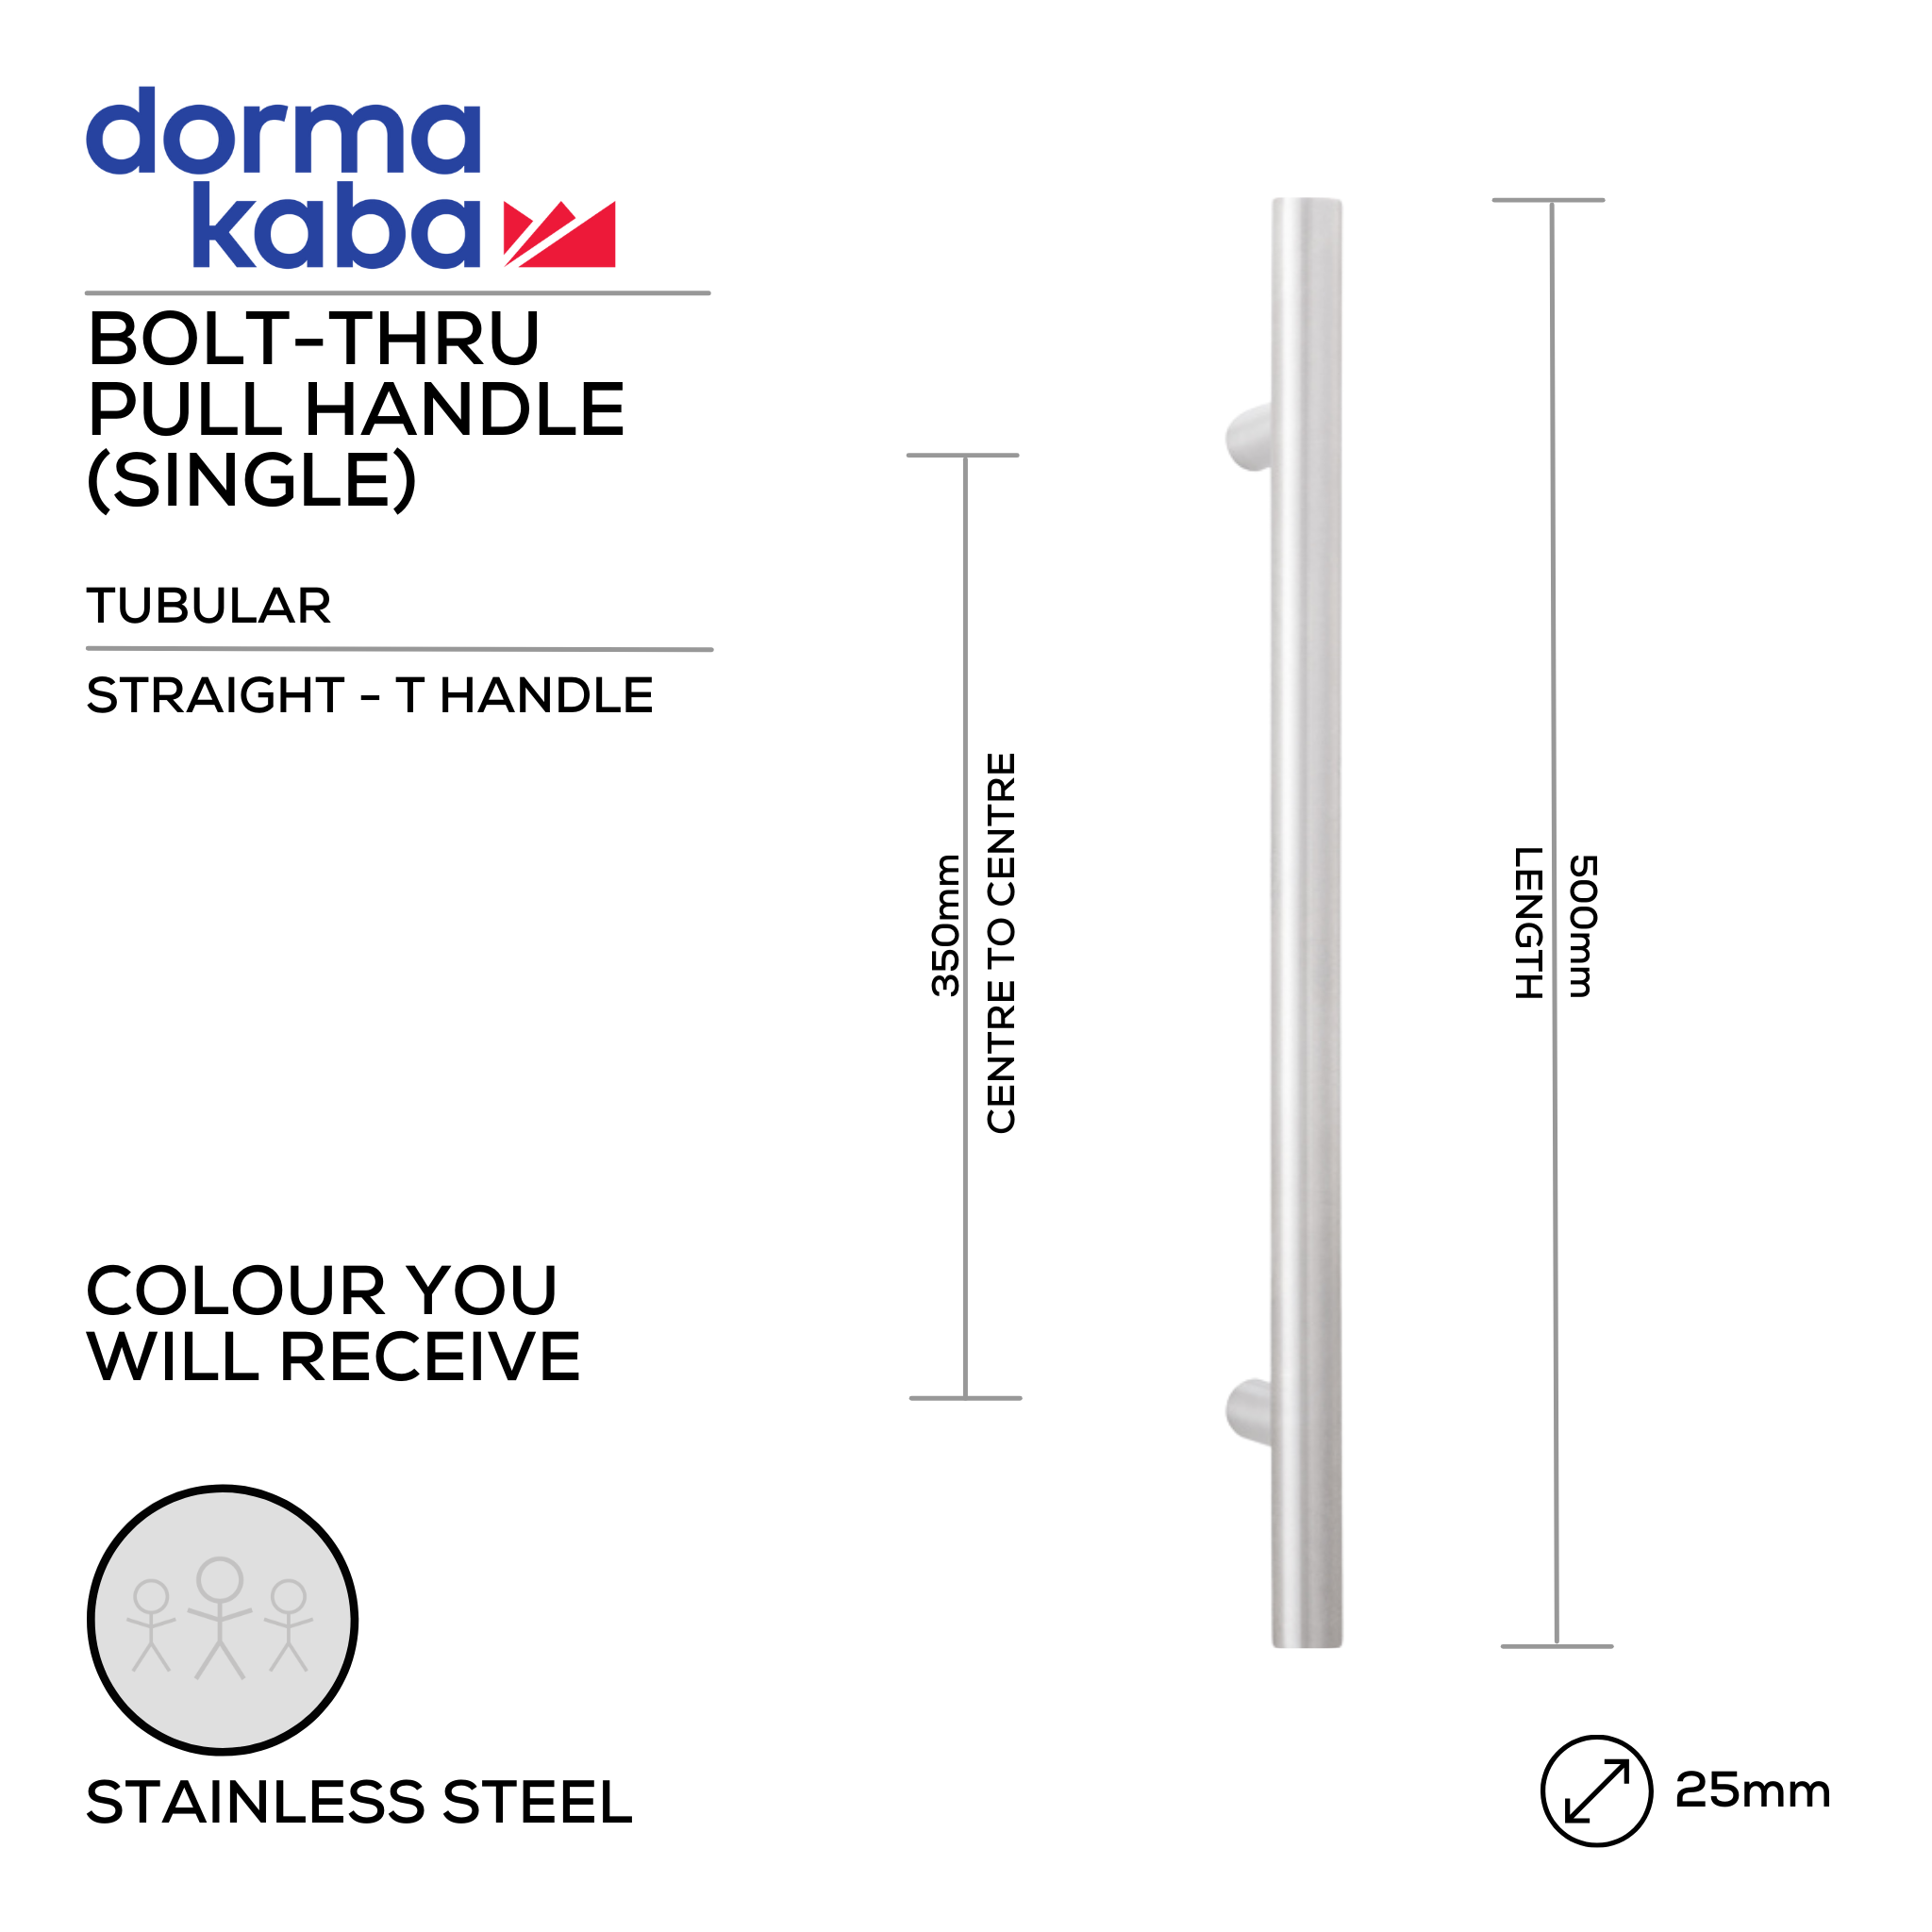 DPH 207 BT, Pull Handle, Tubular, Straight, T Handle, BoltThru, 25mm (Ø) x 500mm (l) x 350mm (ctc), Stainless Steel, DORMAKABA